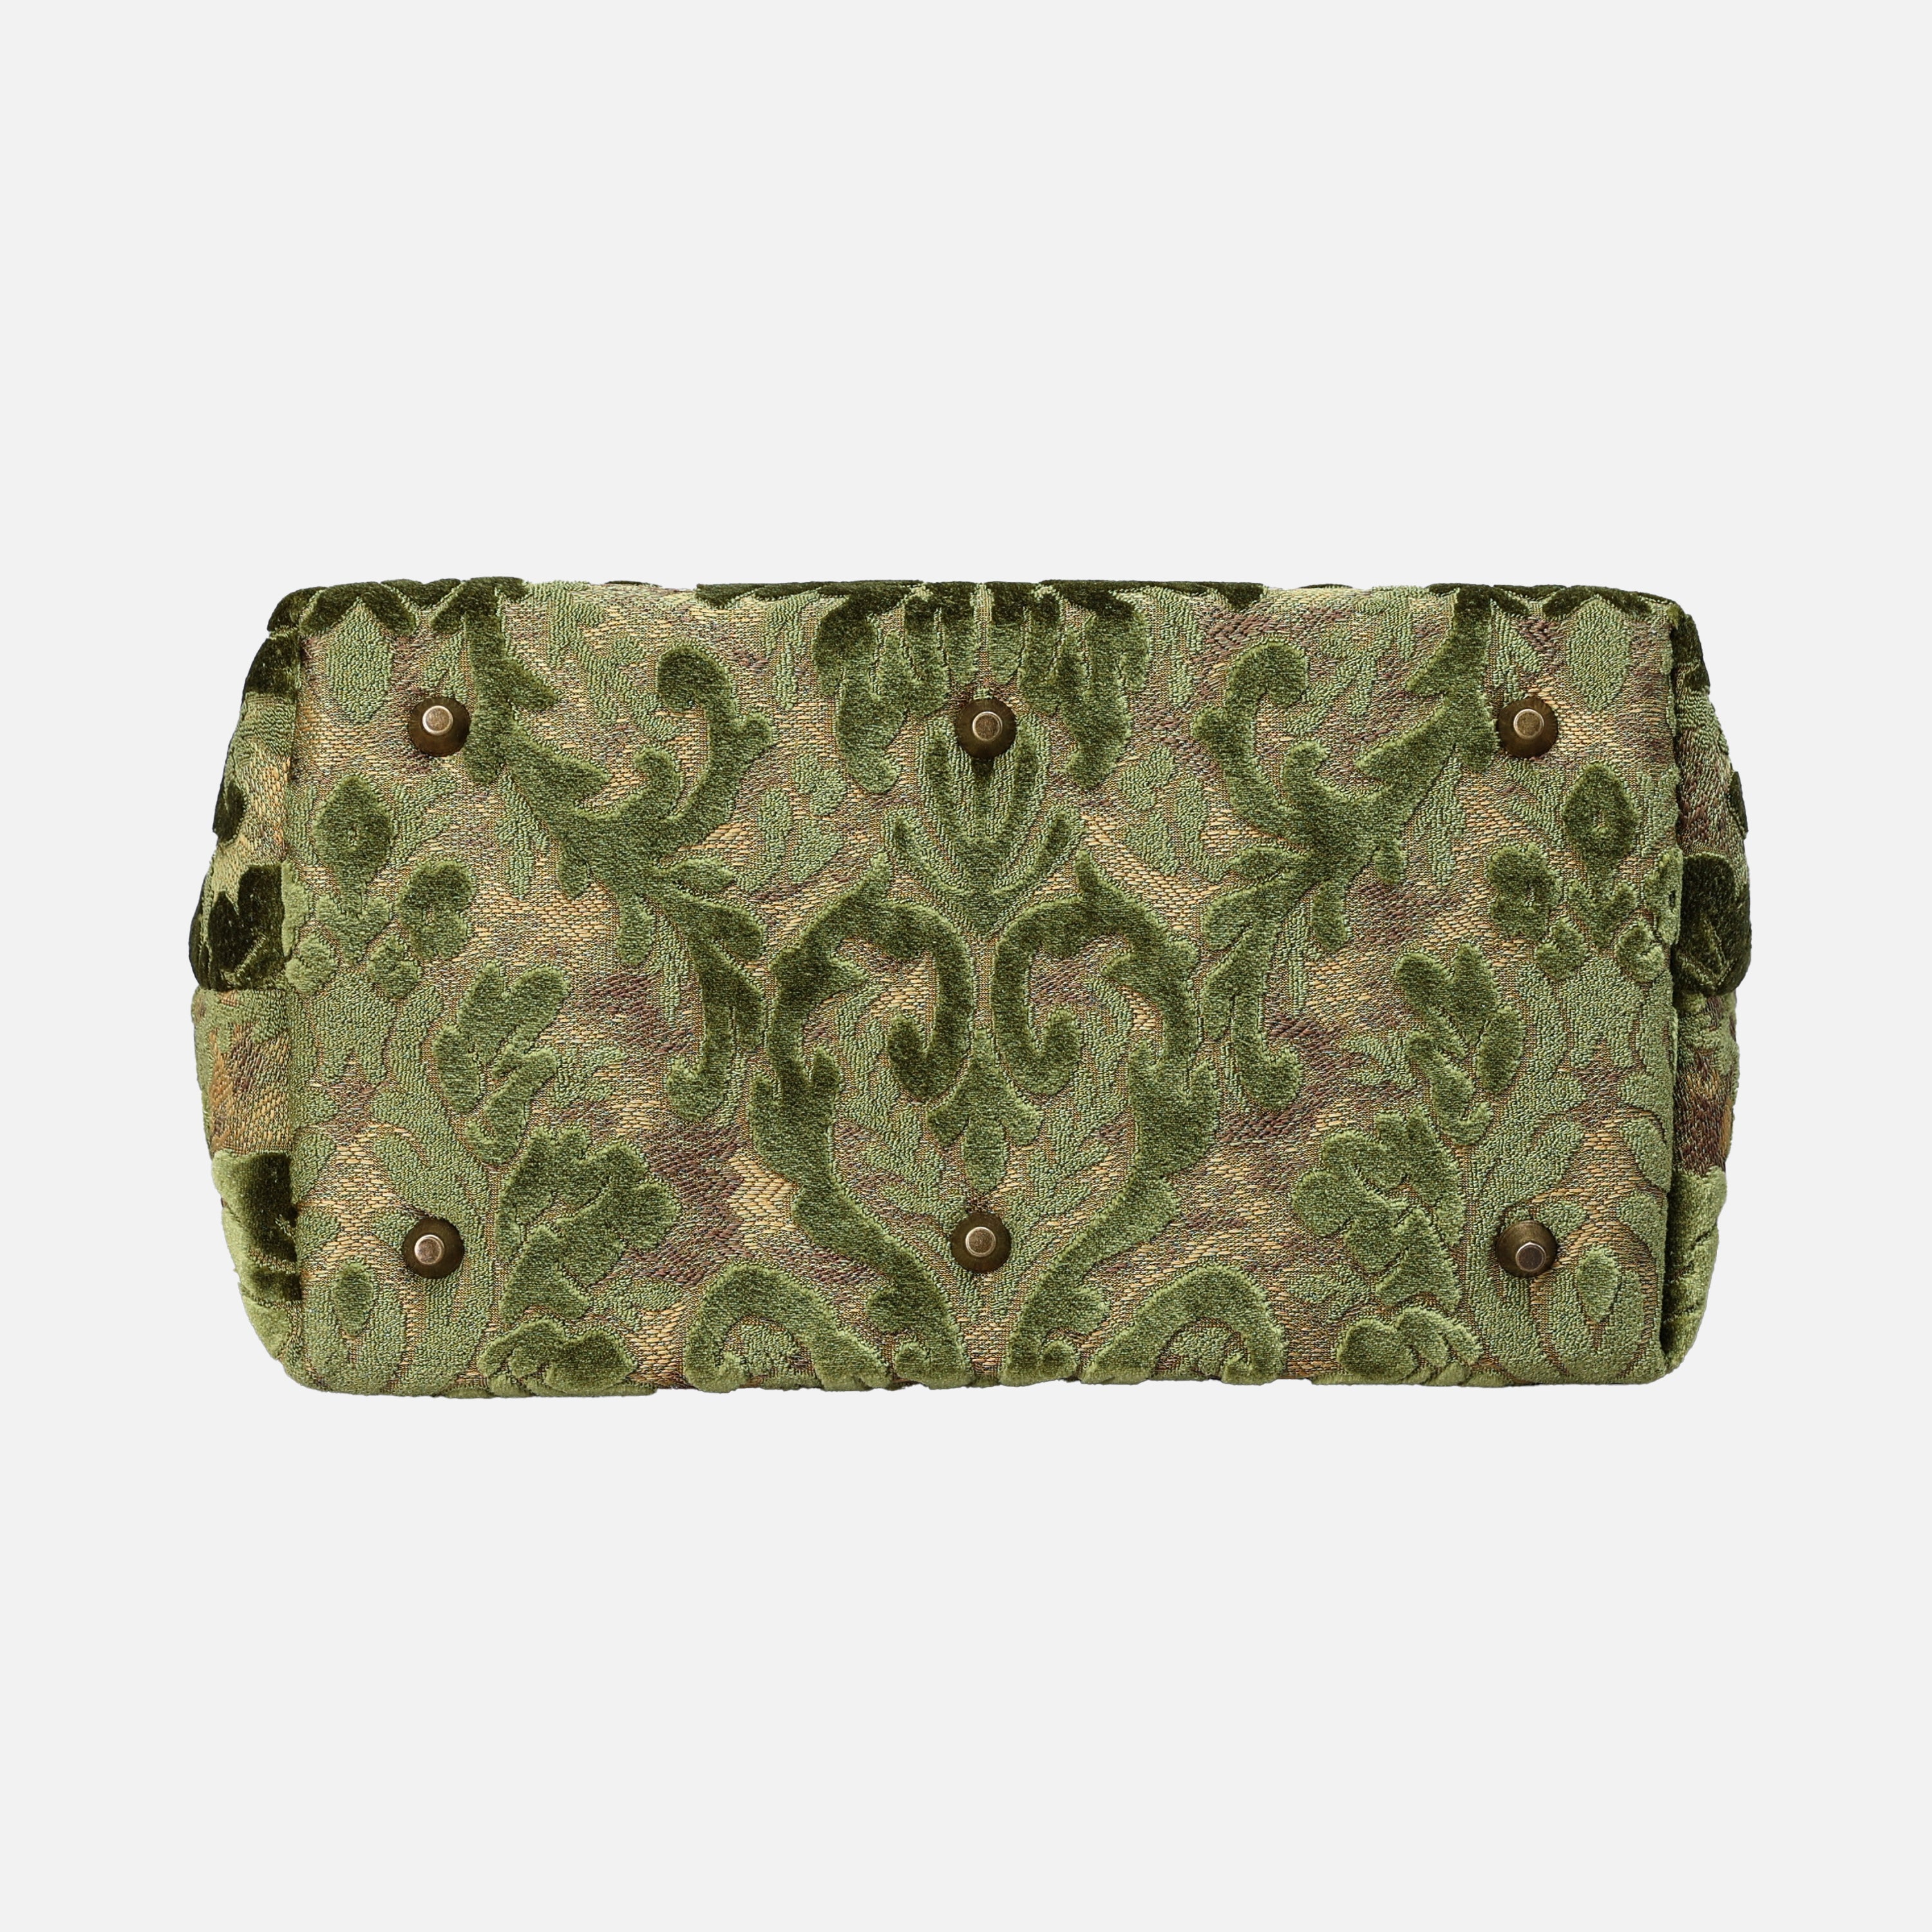 Burnout Velvet Fern Green Carpet Handbag Purse carpet bag MCW Handmade-6